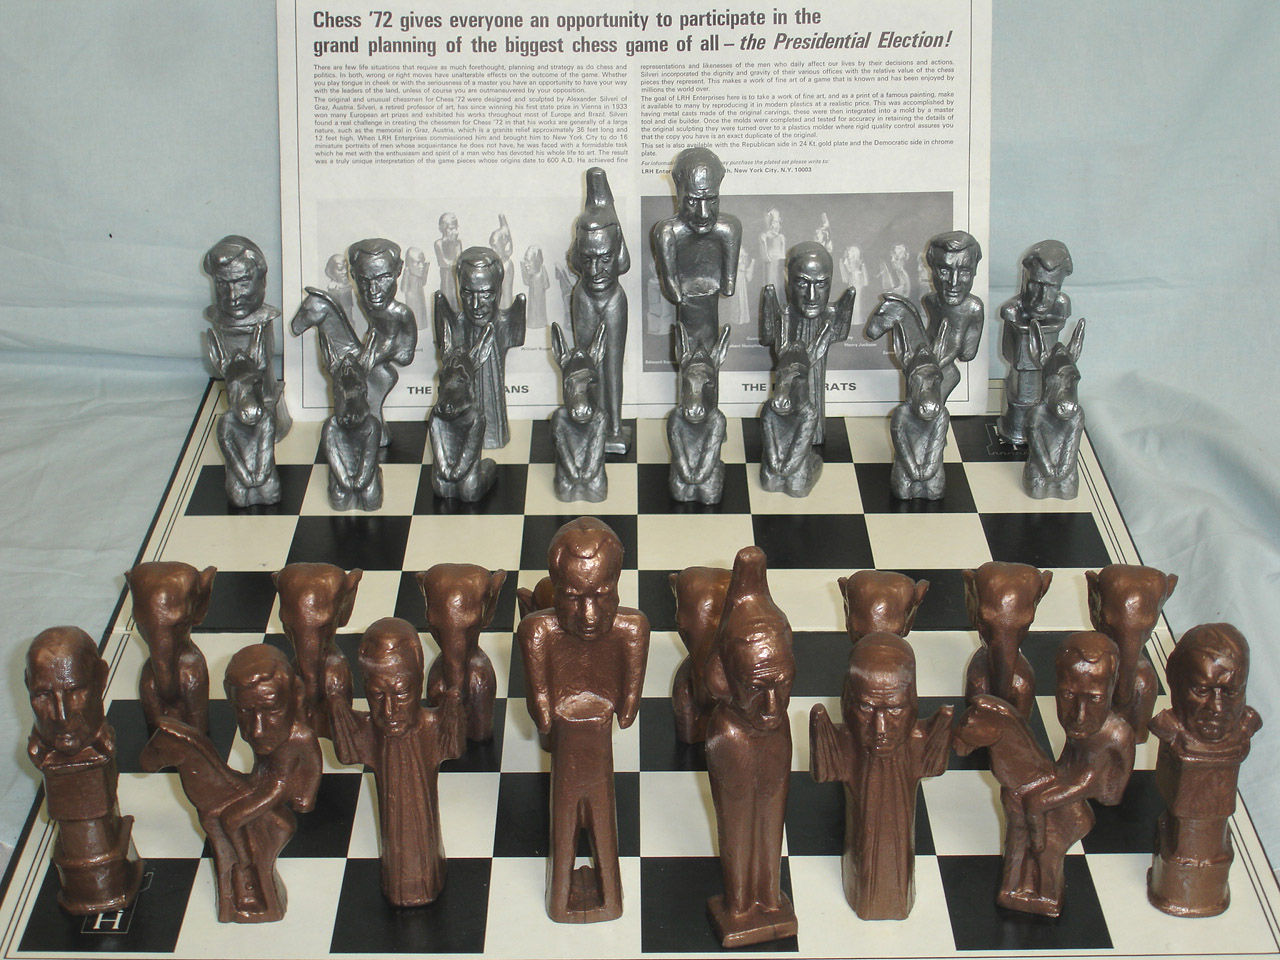 Historical riddle: Petrosian vs Tal, Curacao 1962